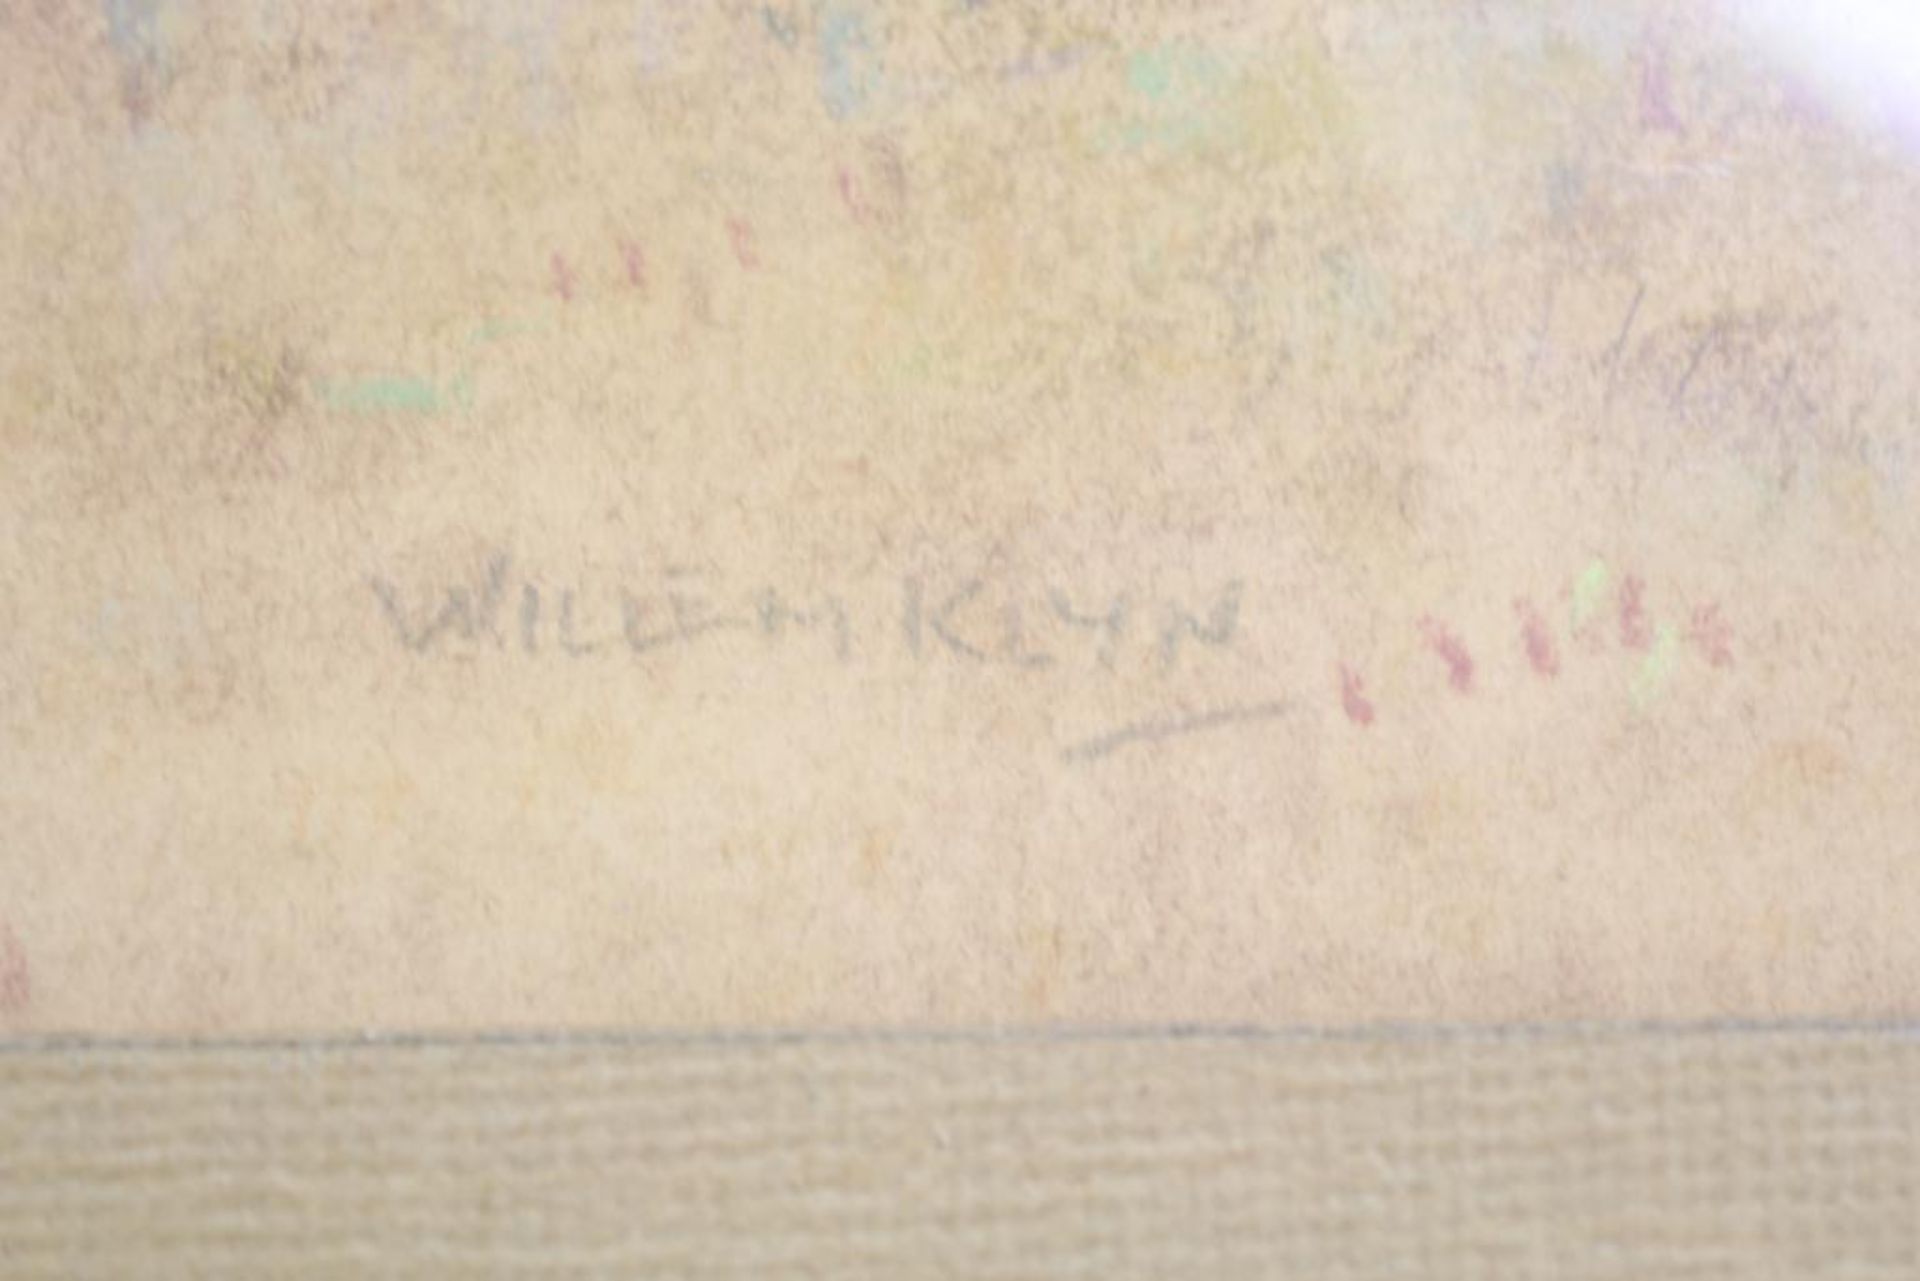 Klyn, Willem. Koren - Image 3 of 4